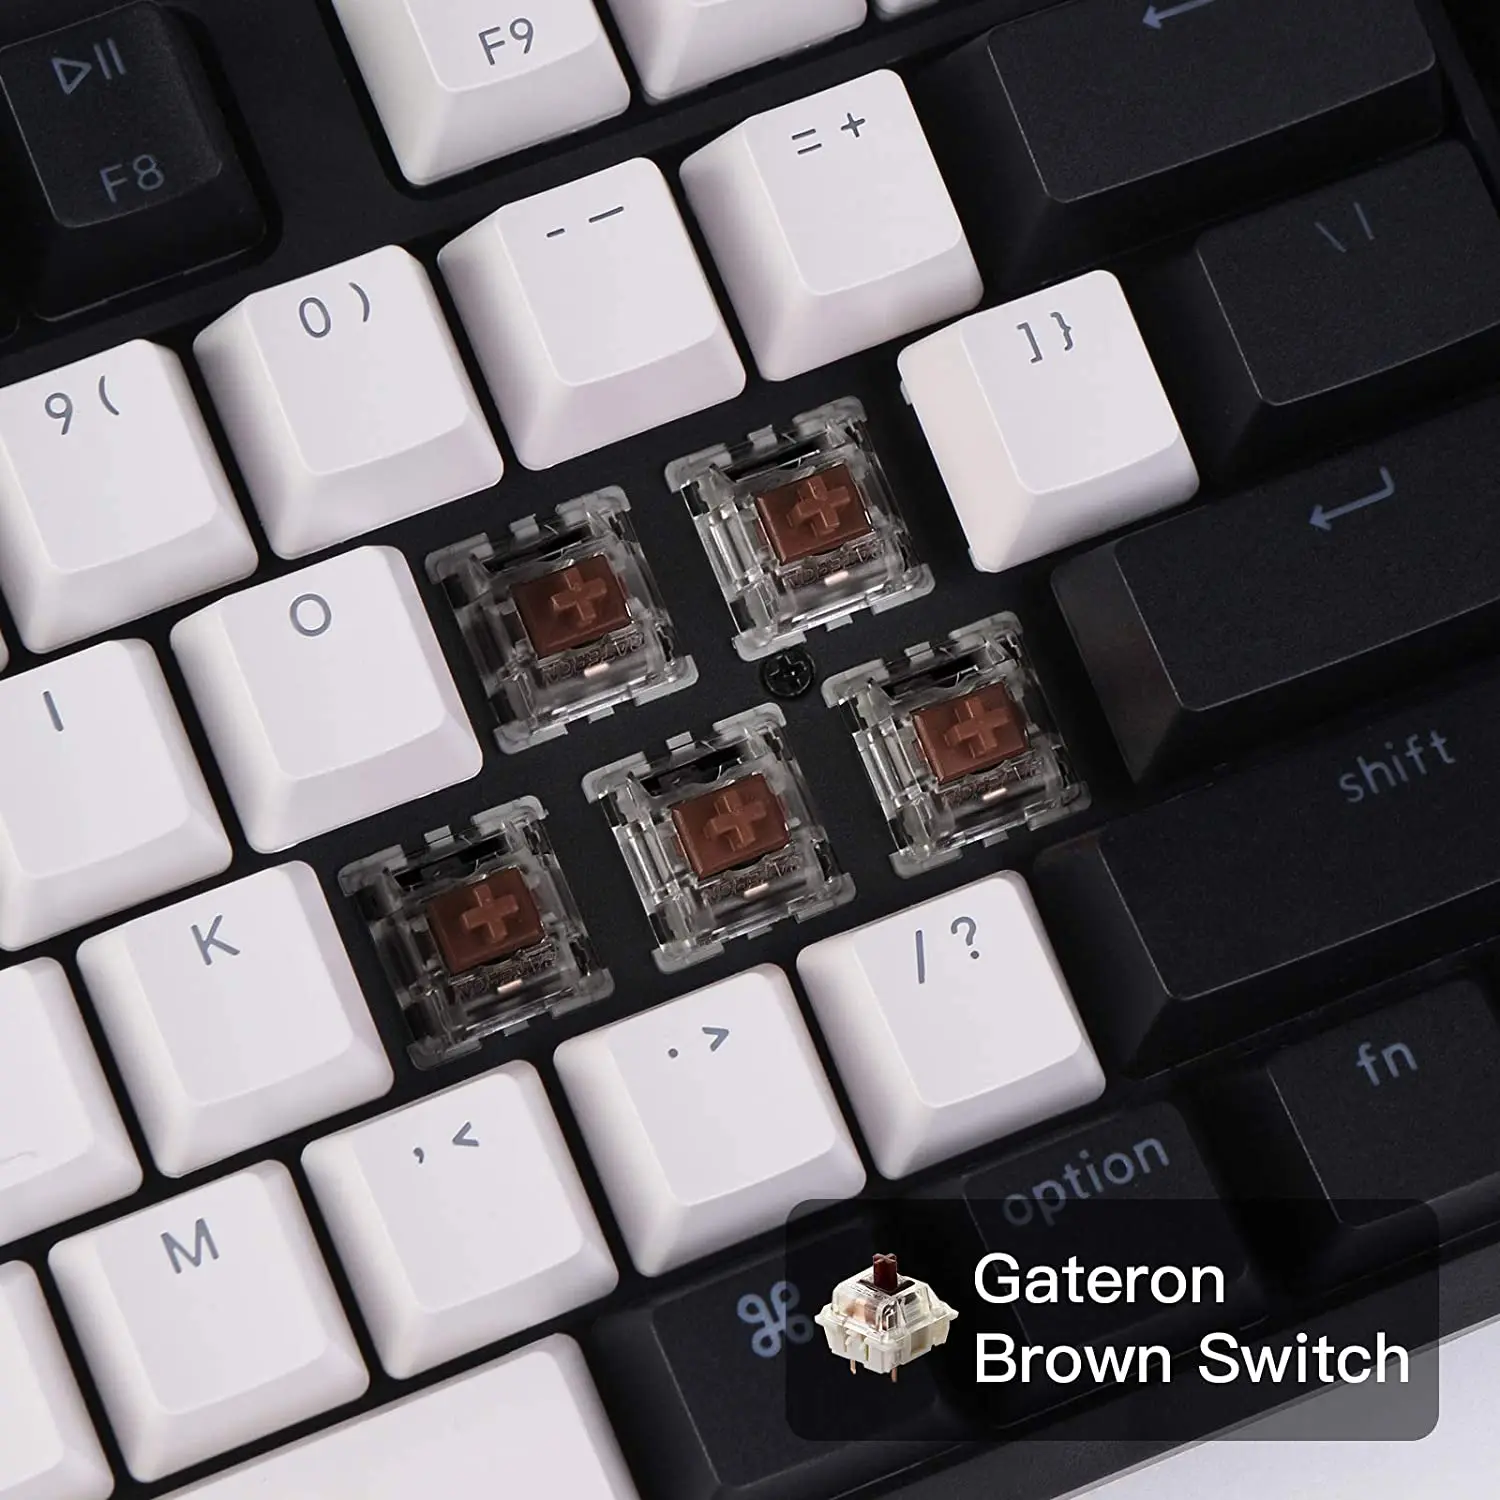 Keychron C1 A Wired Mechanical Keyboard Tenkeyless 87 Keys W/ White Backlight Gateron Switch for Windows Mac images - 6